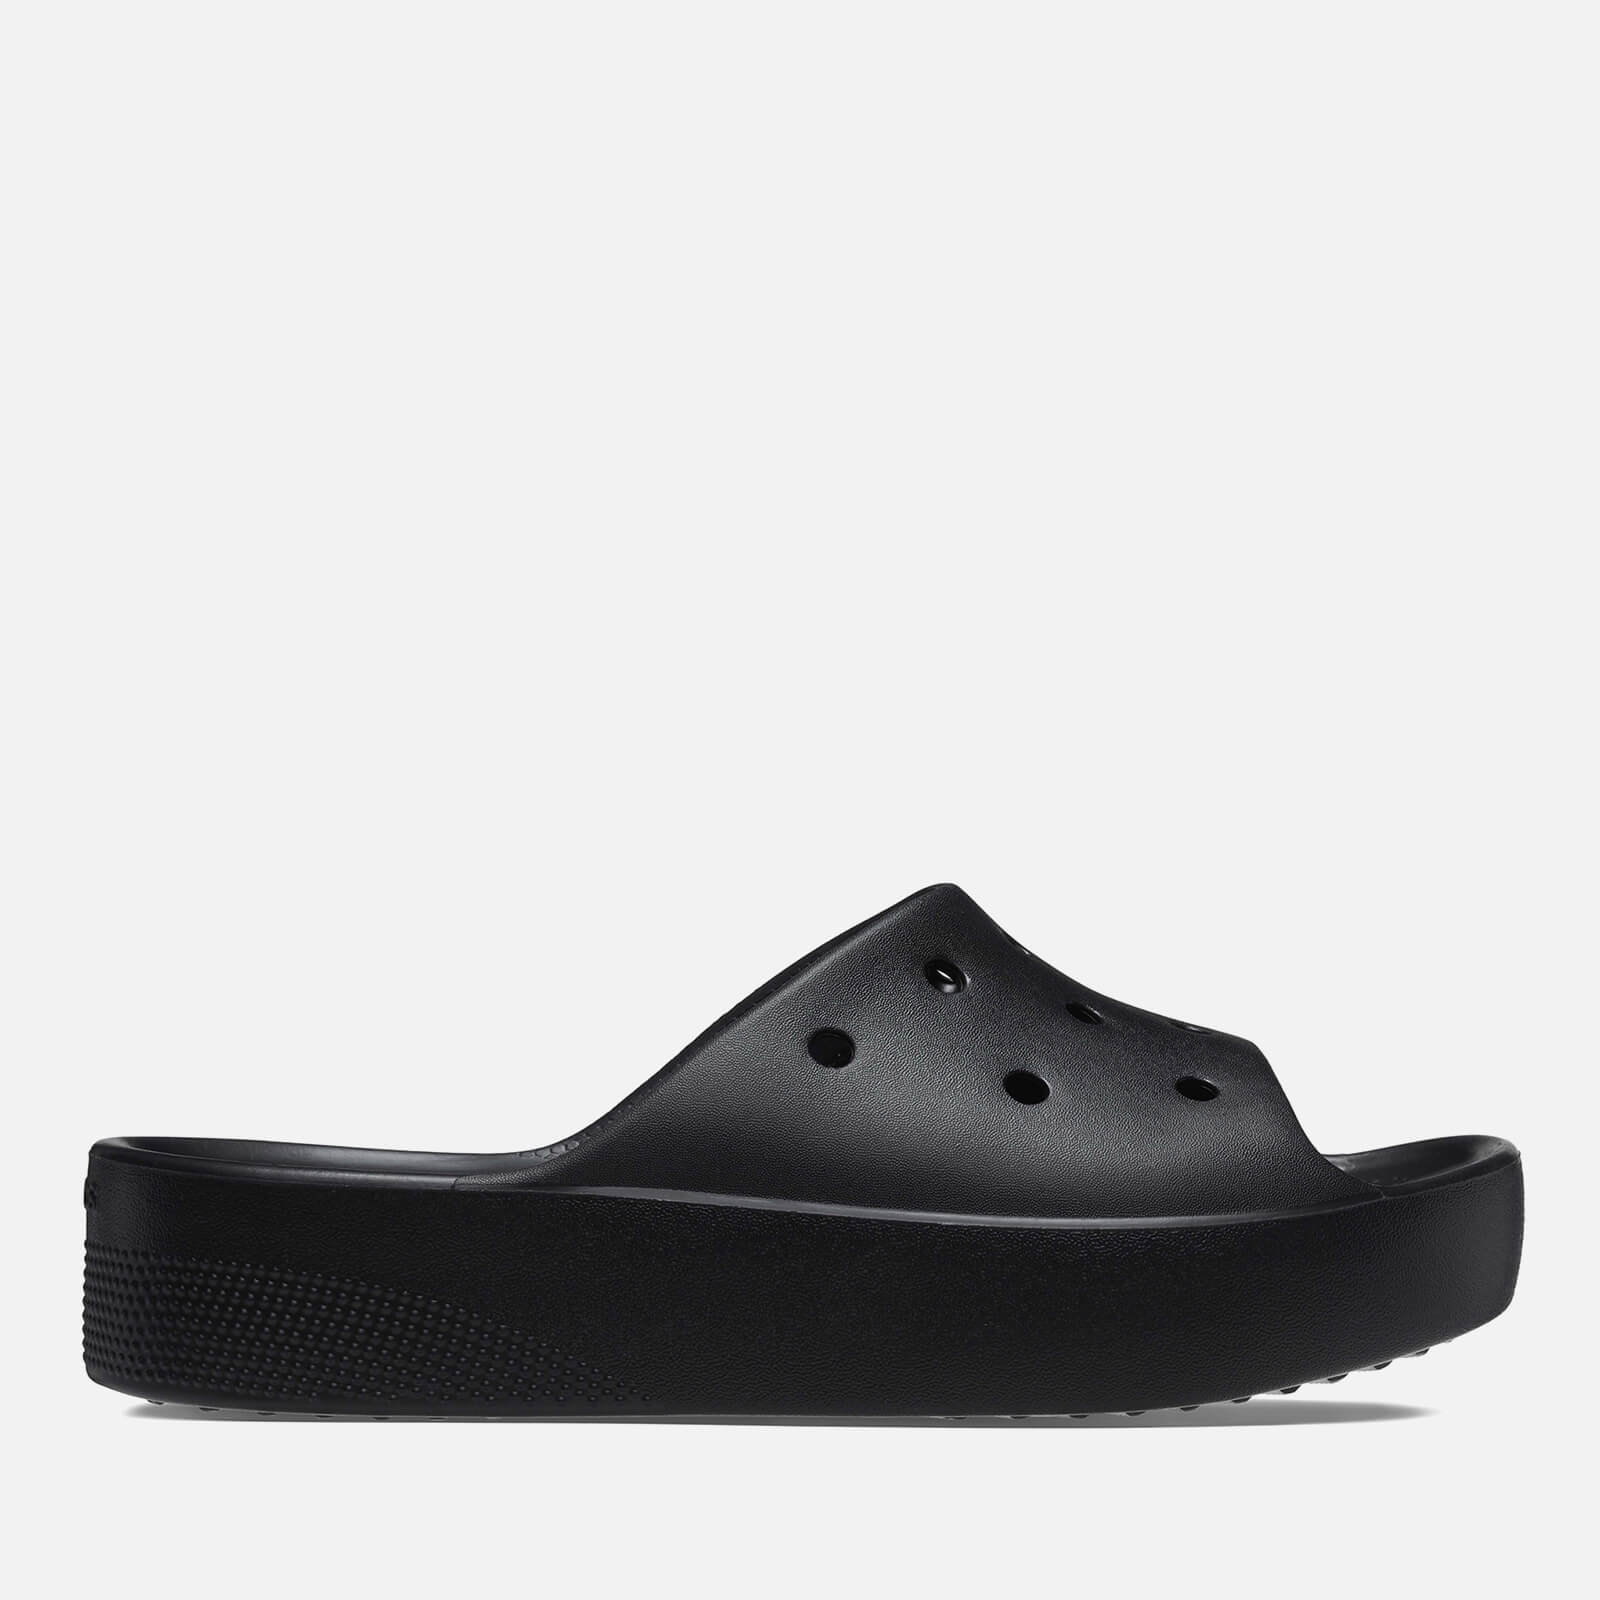 Crocs Women's Classic Croslitetm Platform Slide Sandals